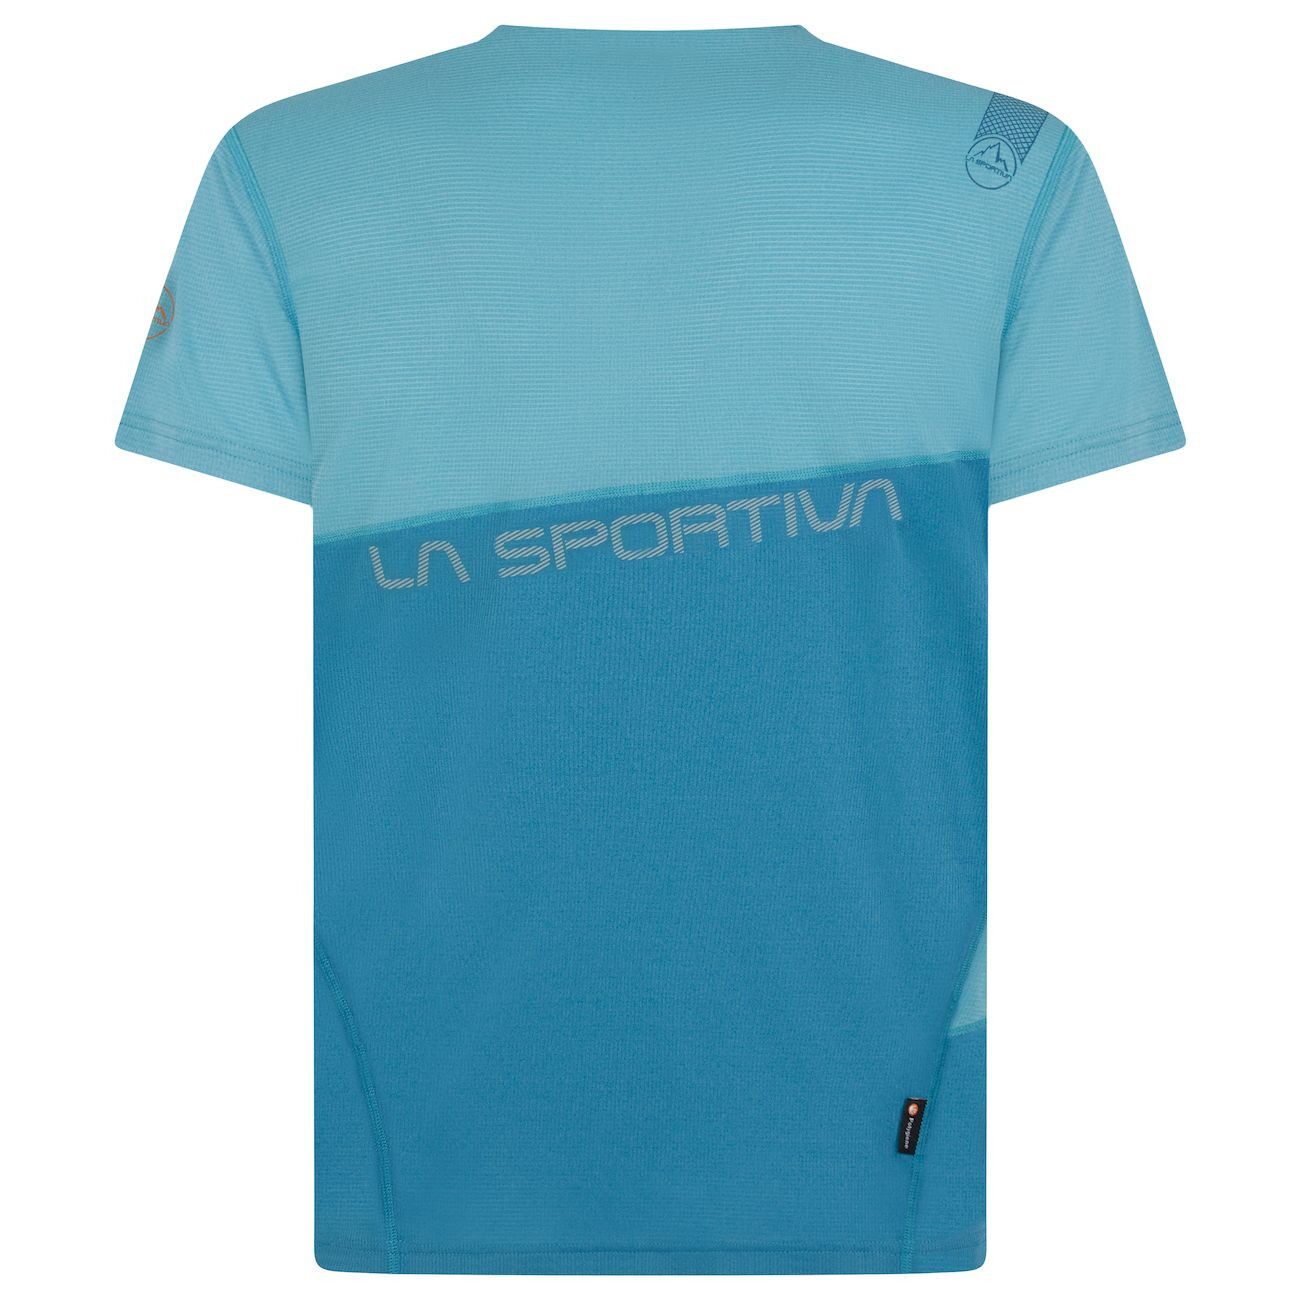 La Sportiva Limitless T-Shirt - Camiseta - Hombre